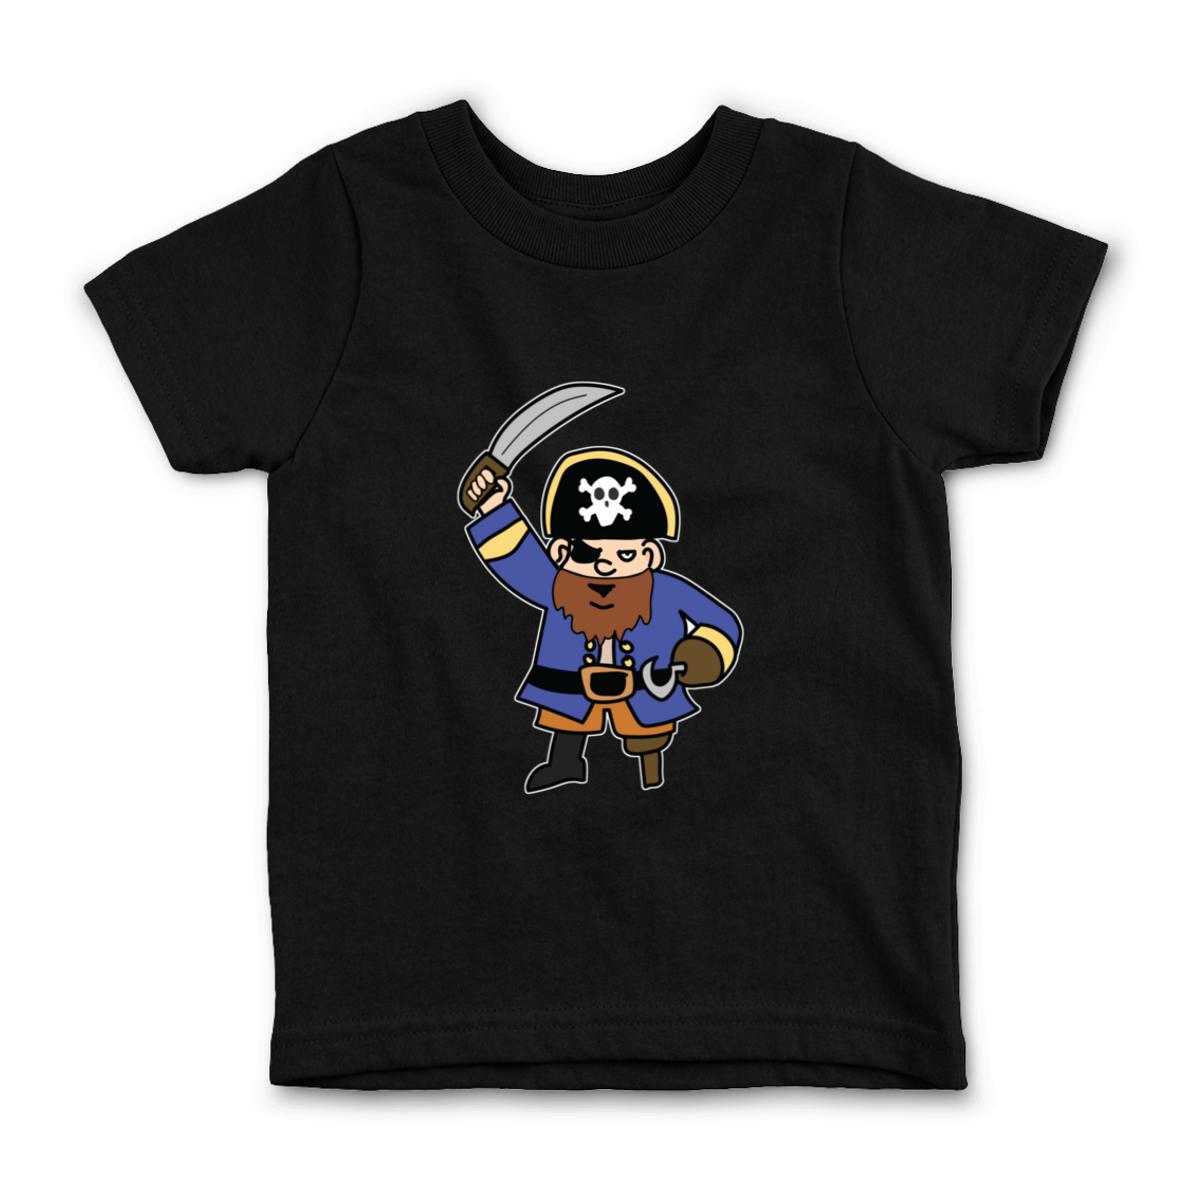 Pirate Kid's Tee Small black